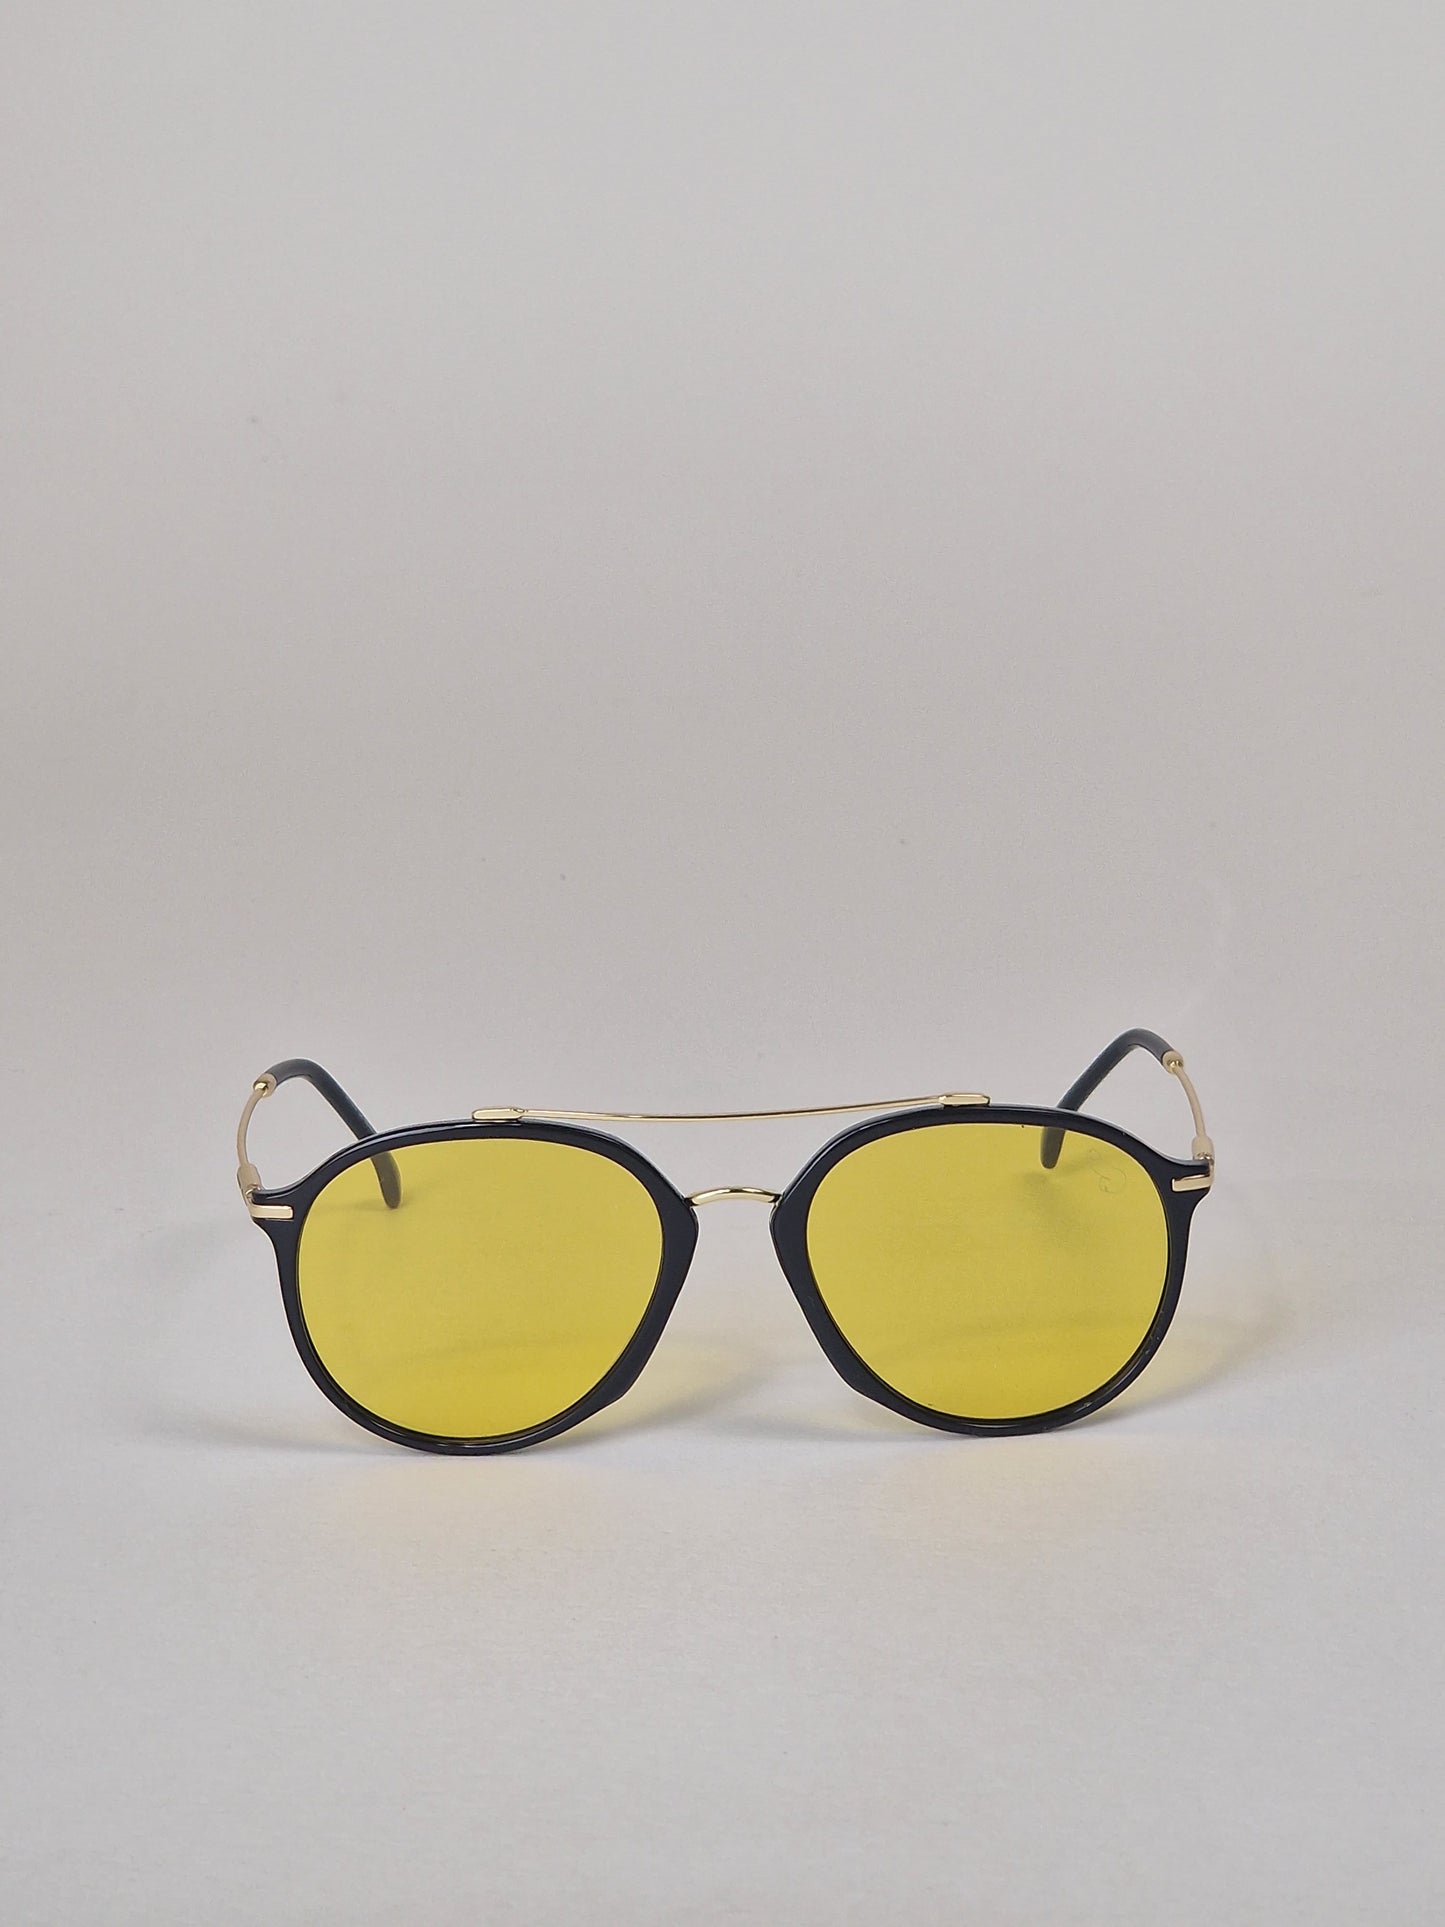 Sunglasses, model 20 - Yellow tinted.